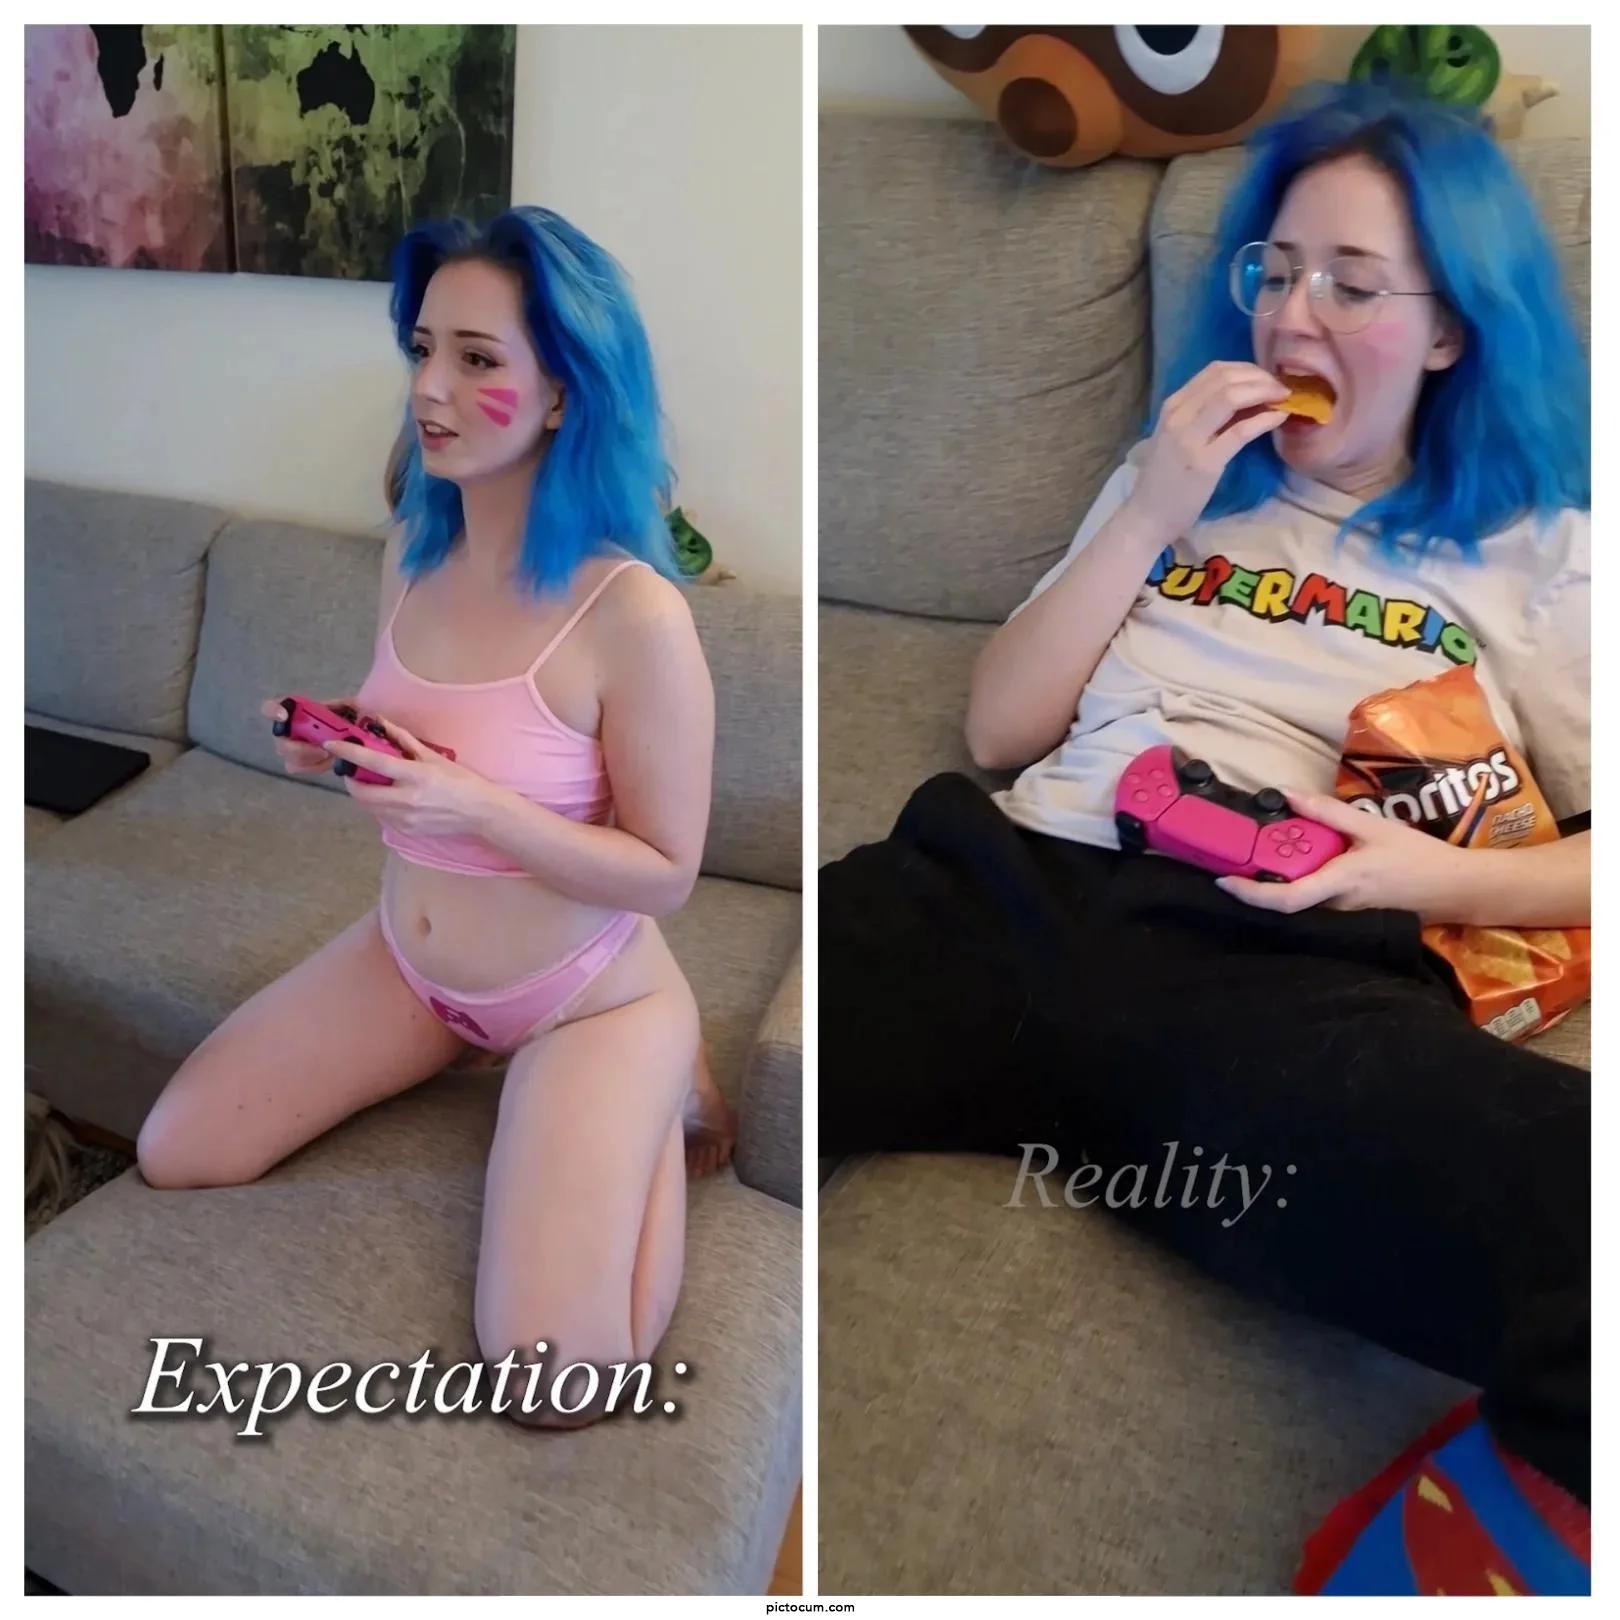 gamergirlfriend - expectation vs. reality